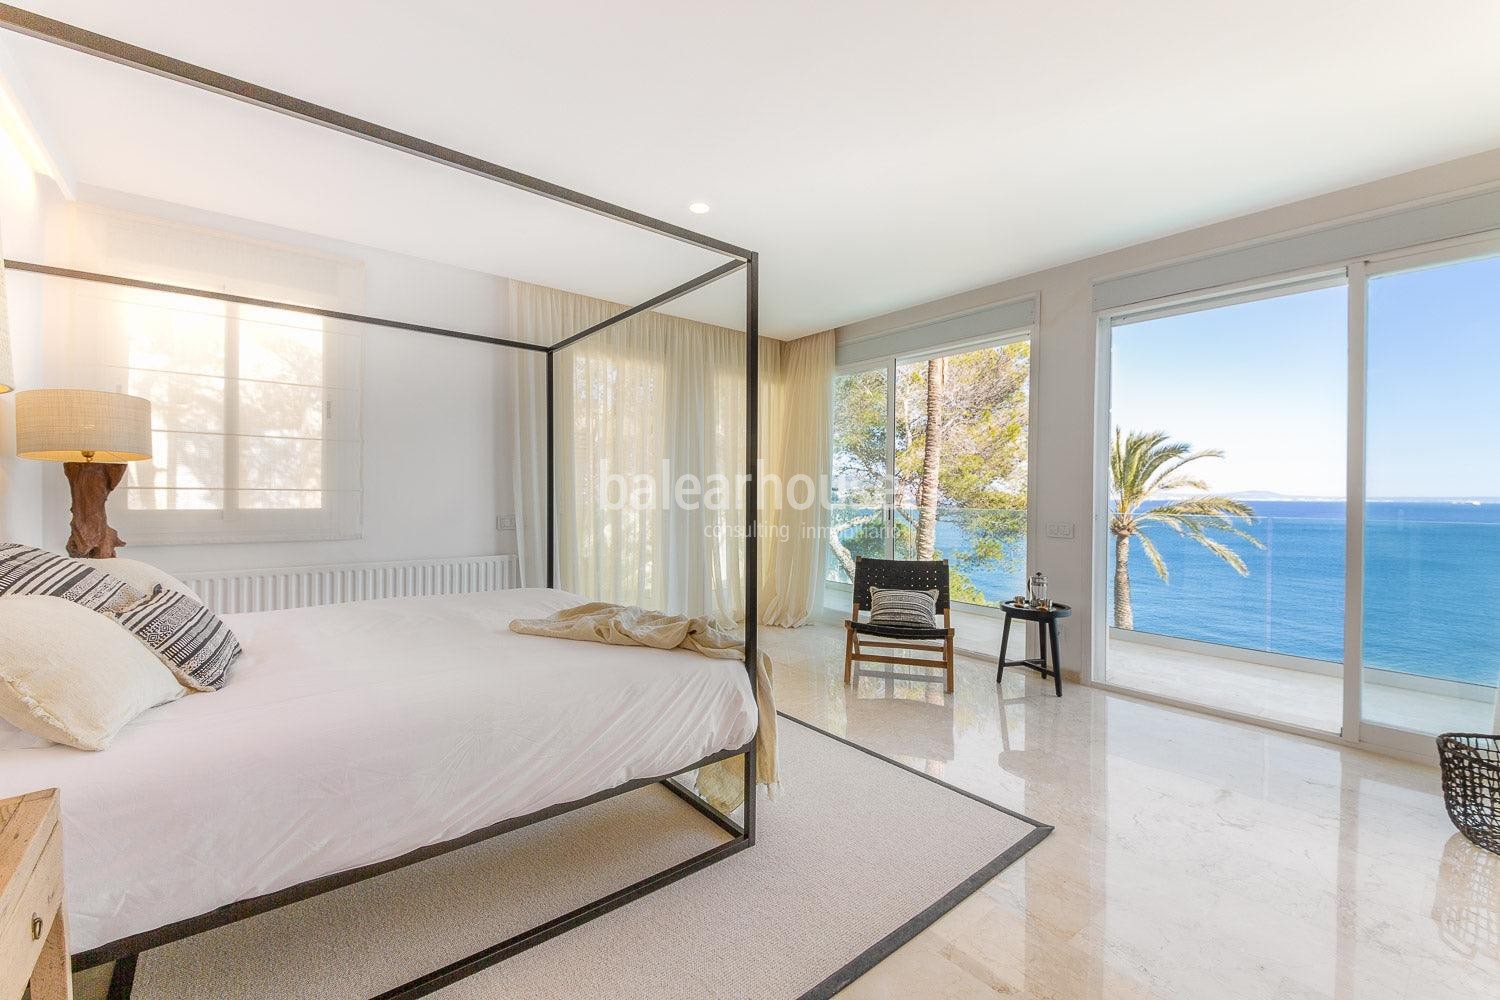 Große private Villa zur Miete mit spektakulärem Meerblick in erster Meereslinie in Cala Vinyes